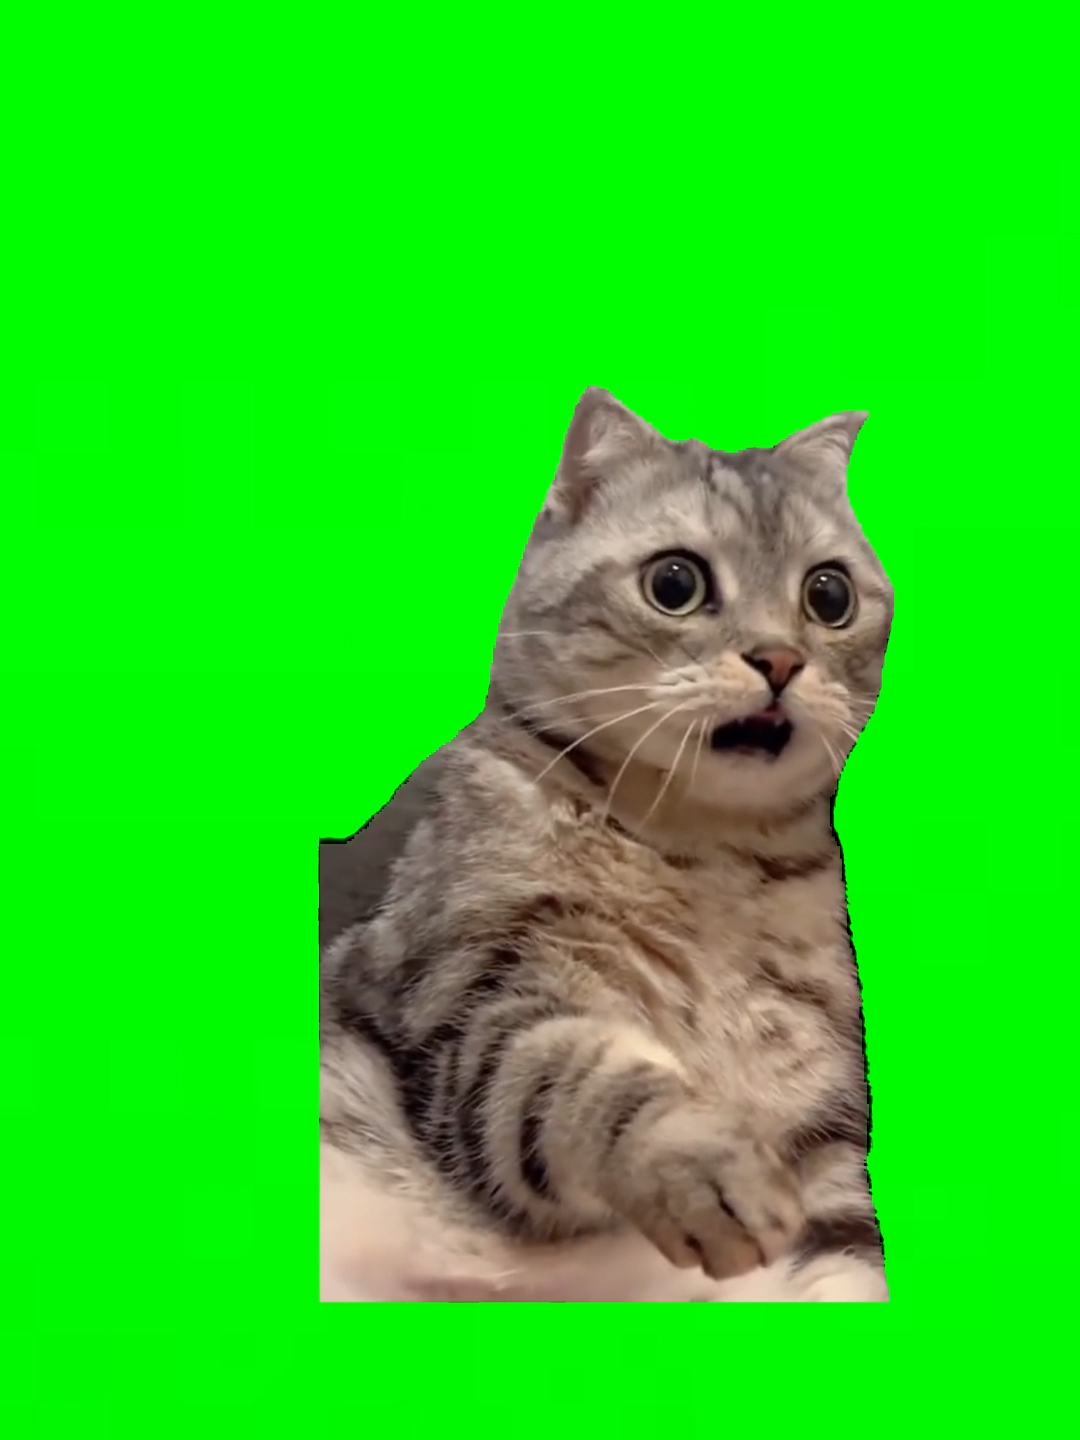 Shocked the cat green screen #shocked#cat#meme#fyp #fypシ #greenscreen#tiktok